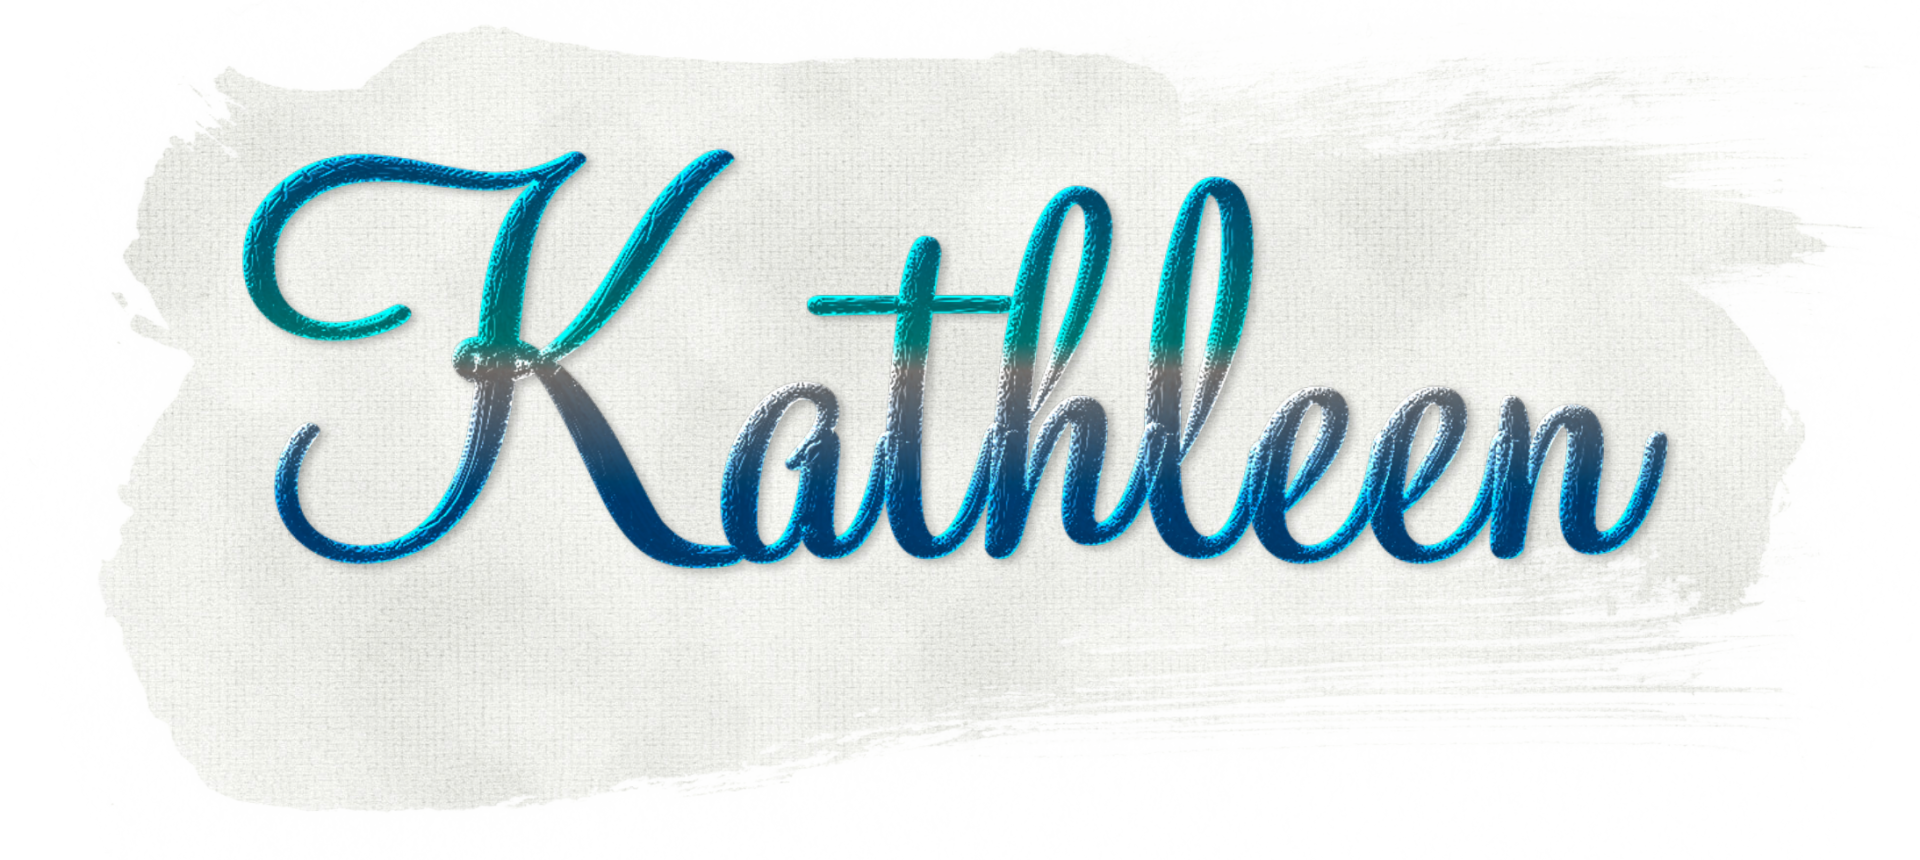 First Name - KATHLEEN